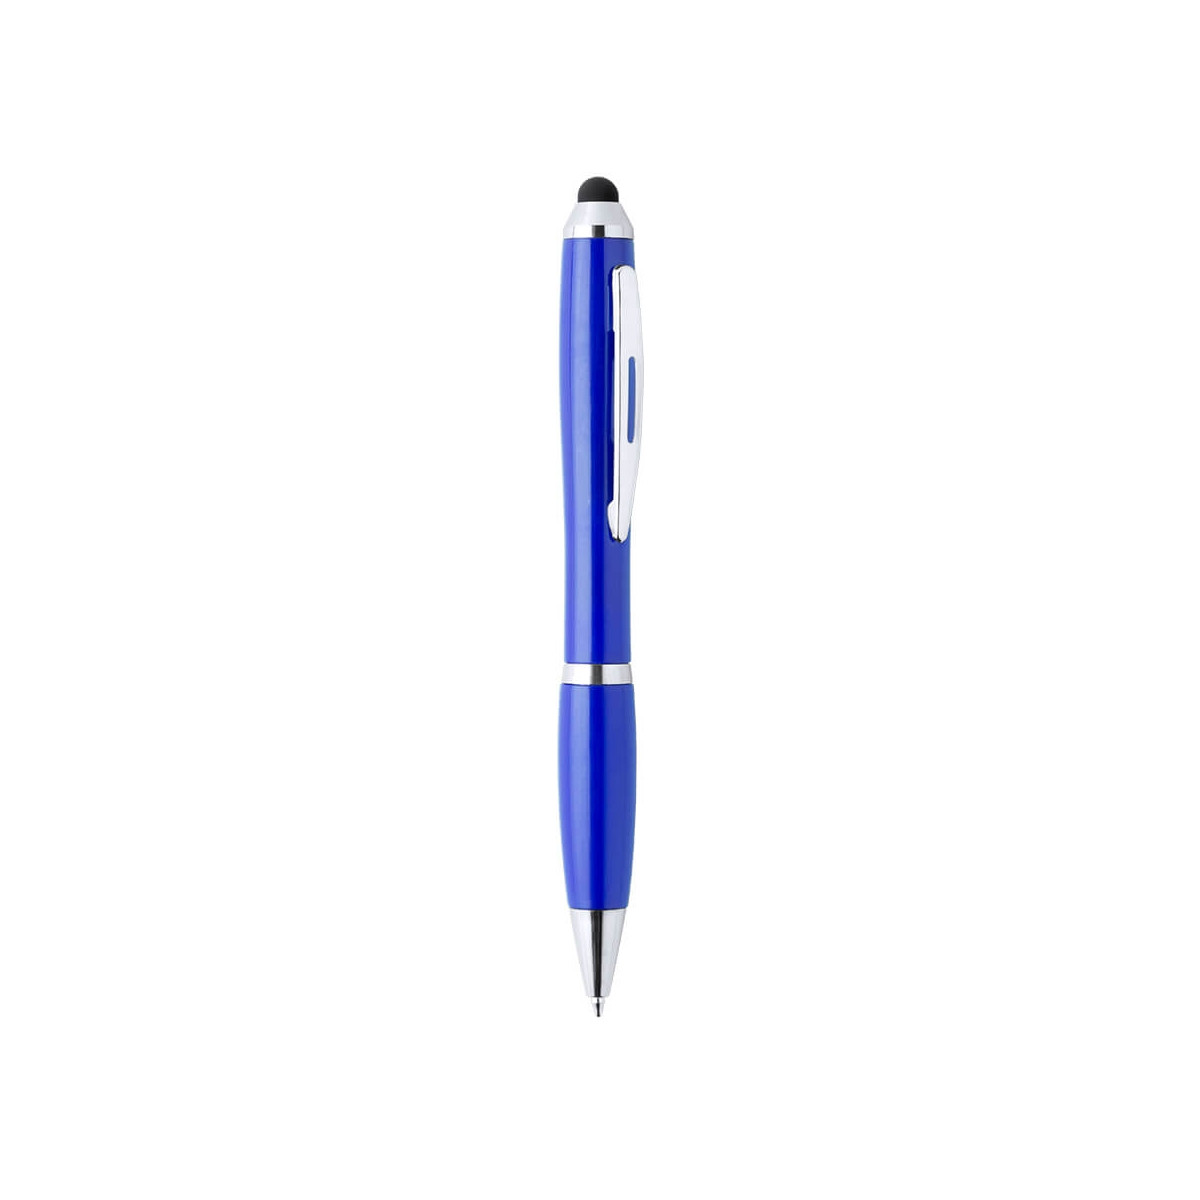 Beau stylo bleu avec pointe tactile